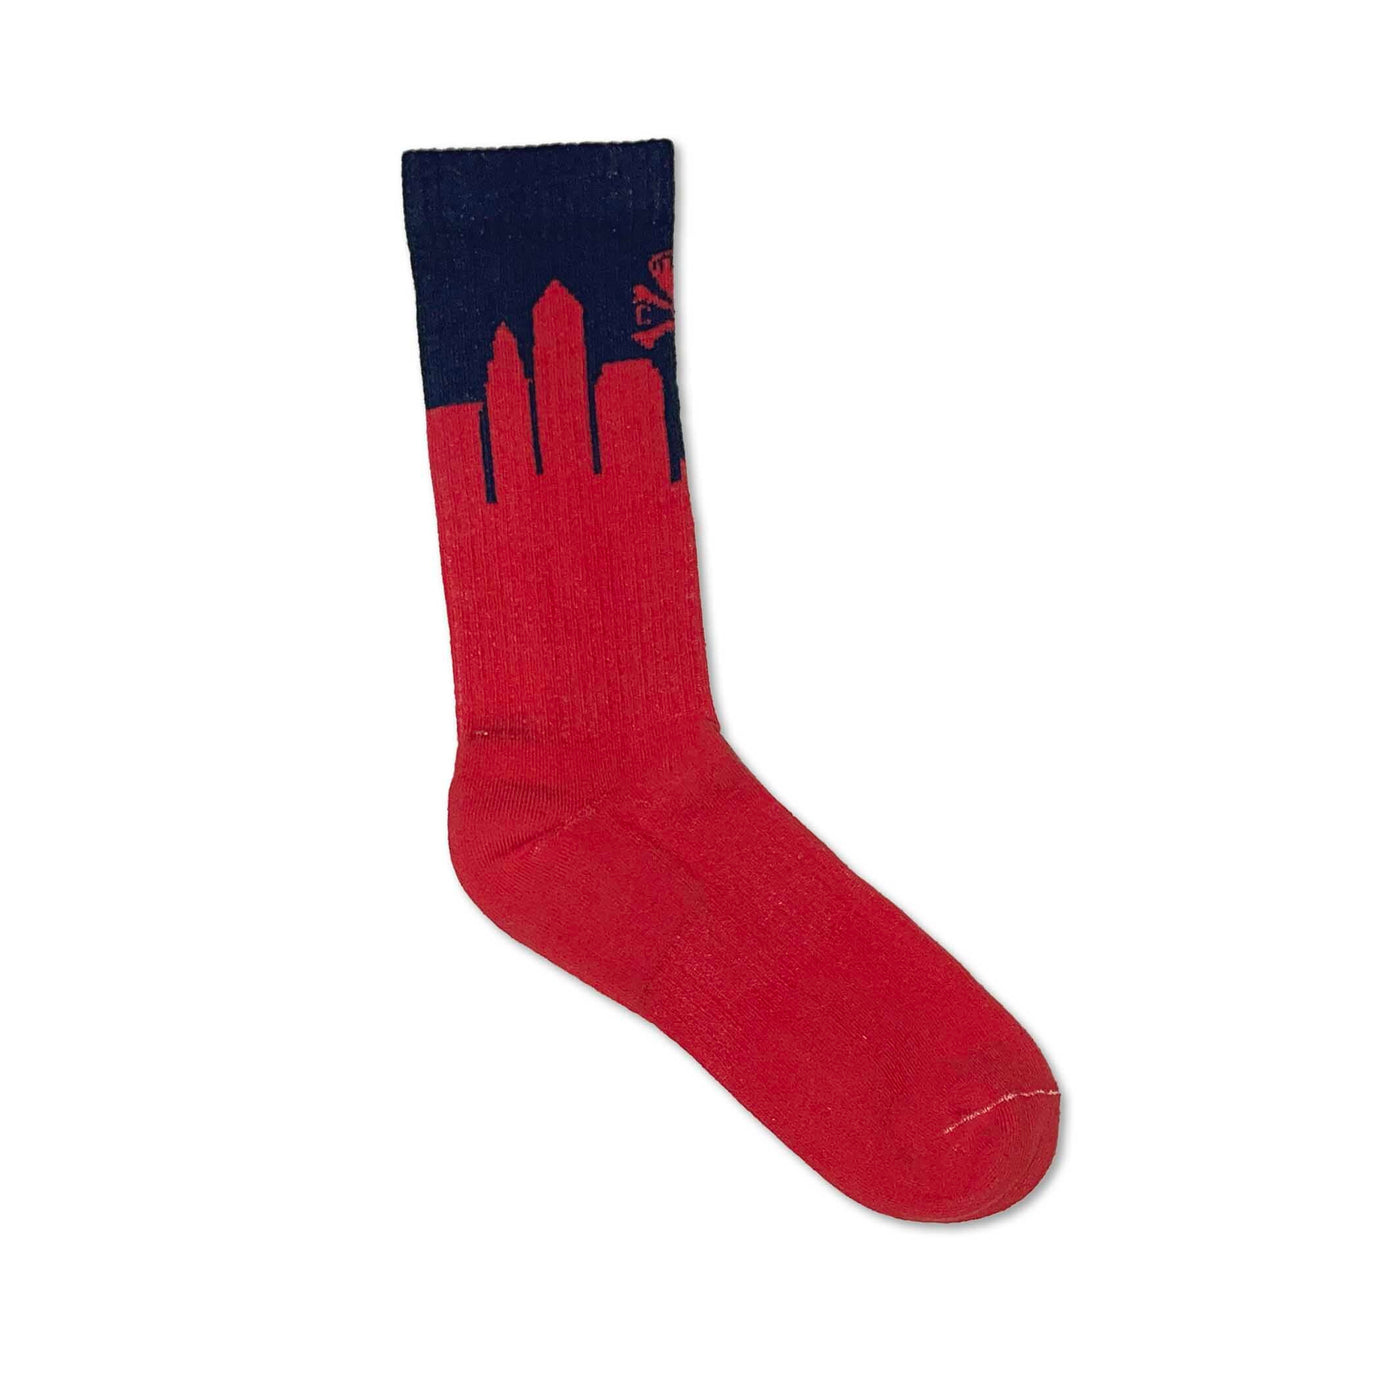 Cleveland Skyline Socks - Navy/Red